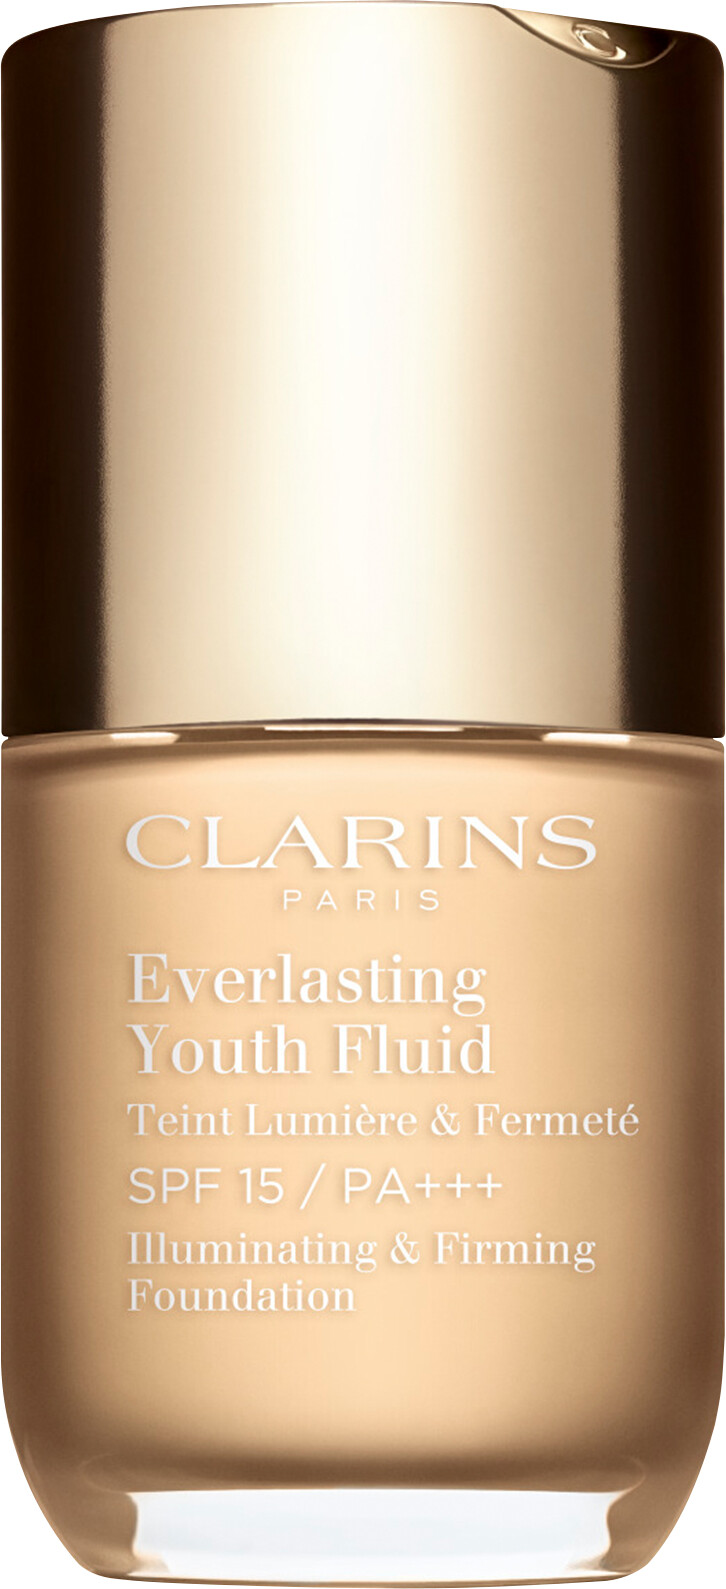 Clarins Everlasting Youth Fluid Illuminating and Firming Foundation SPF15 30ml 100.5 - Cream